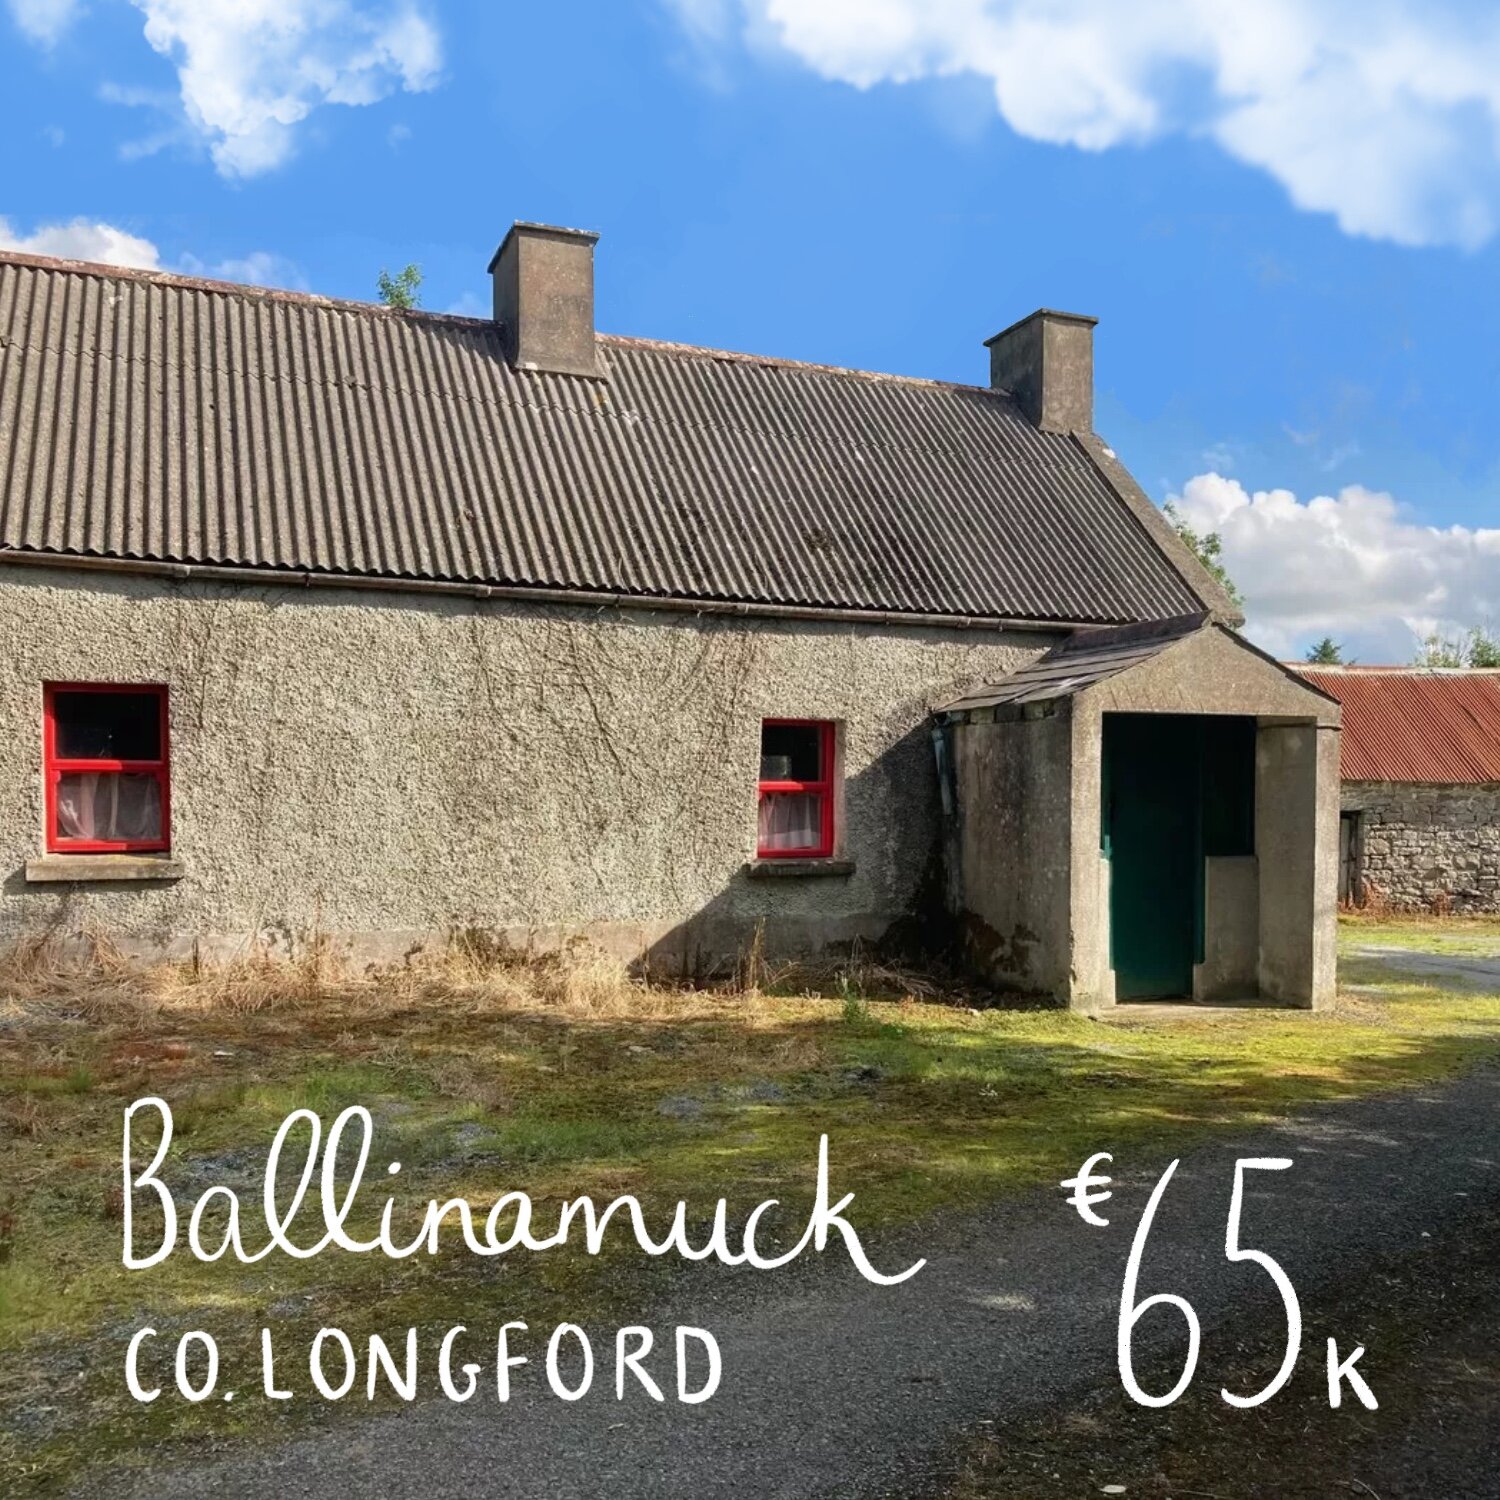 Townagh, Ballinamuck, Co. Longford. €65k